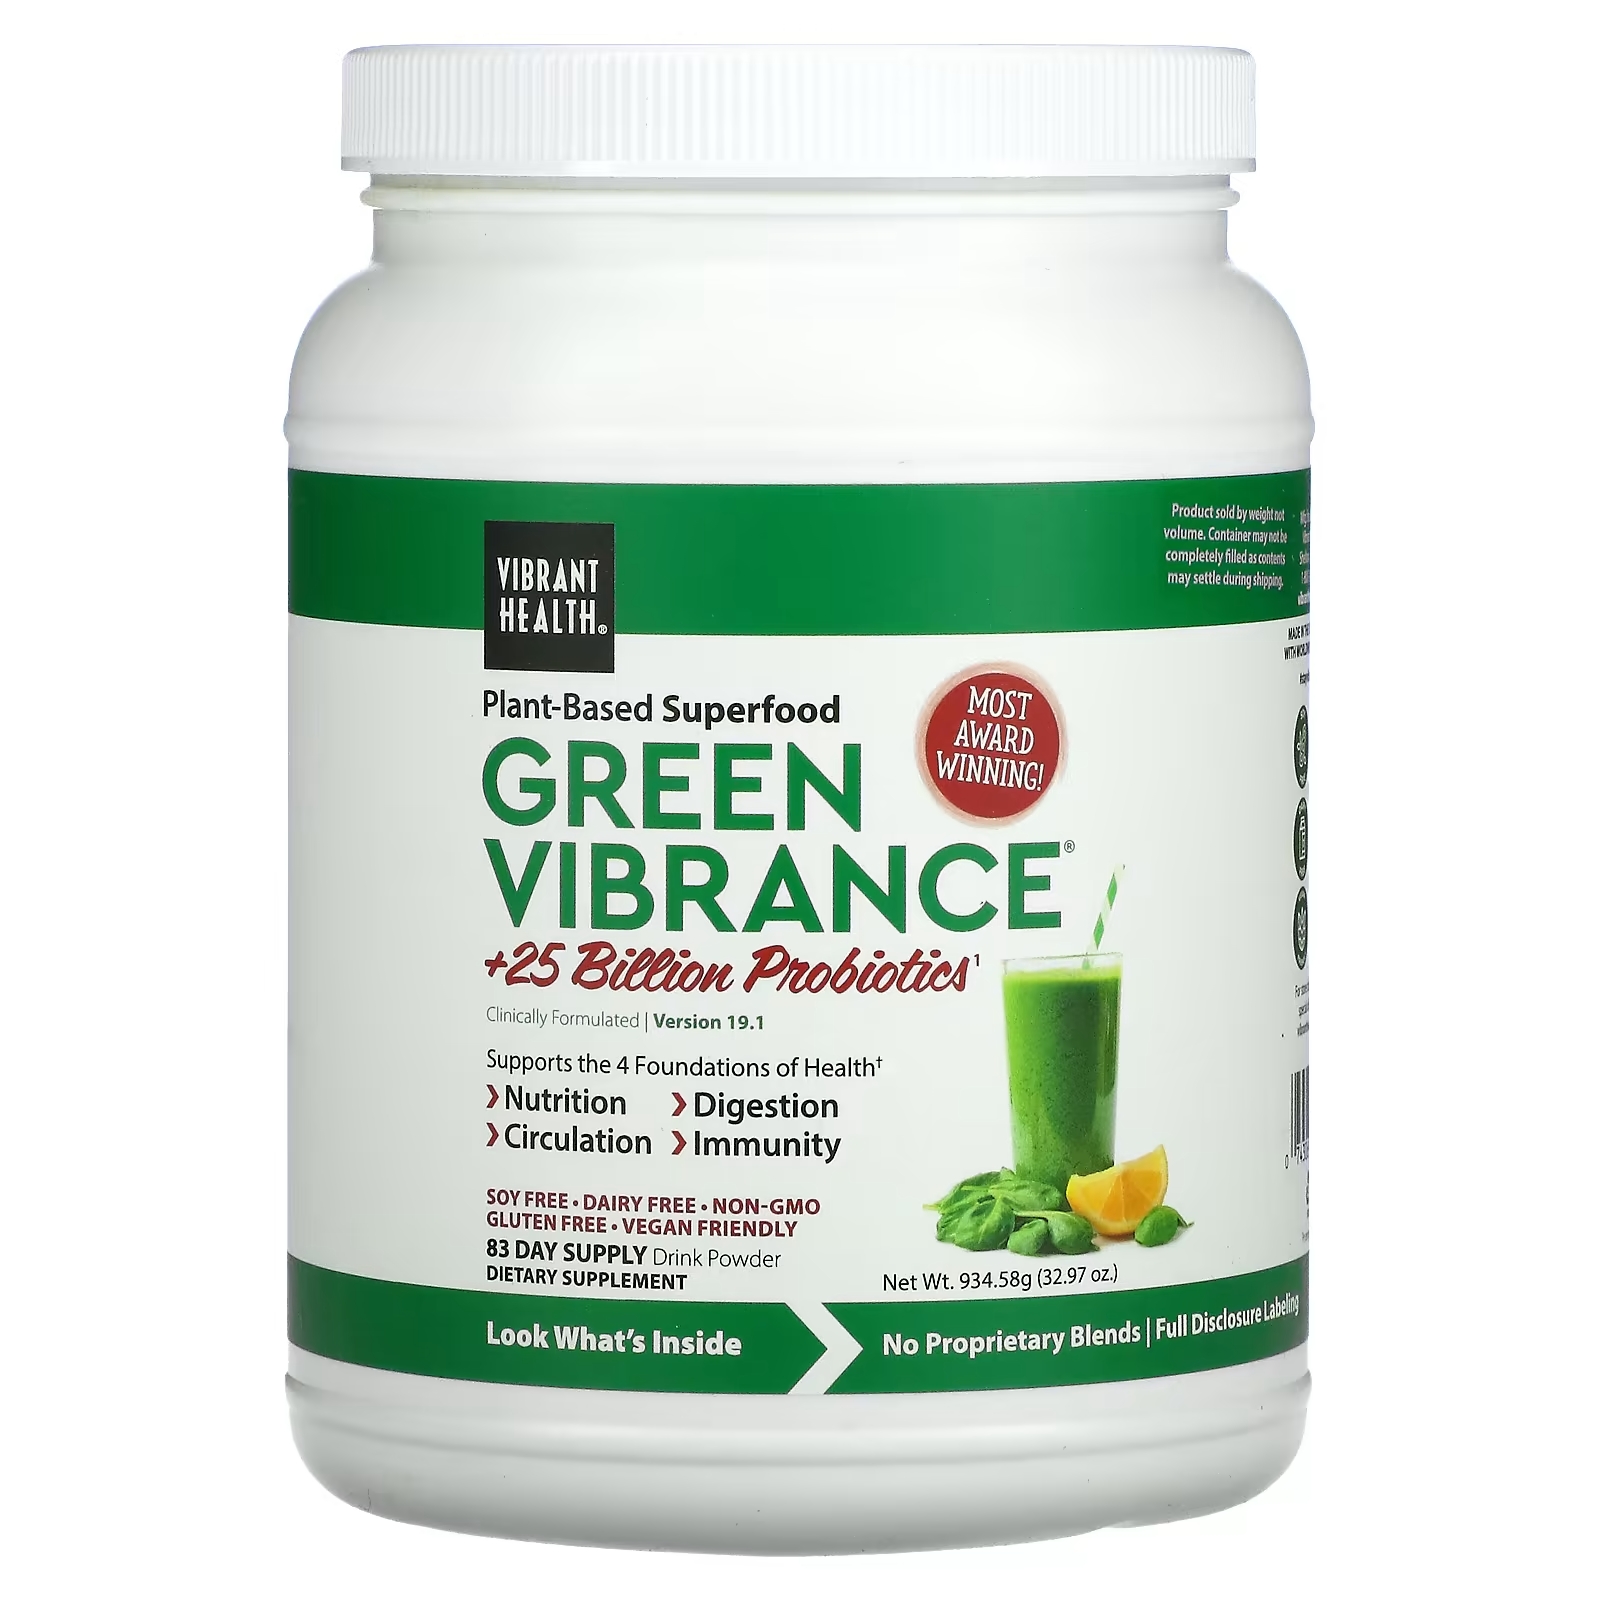 Пробиотики Vibrant Health Green Vibrance, 913 г vibrant health green vibrance 25 млрд пробиотиков версия 17 0 35 27 унц 1 кг